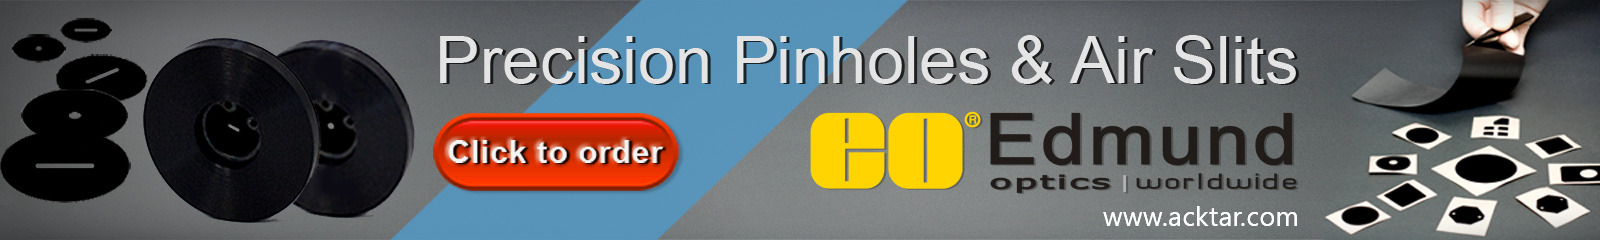 Precision pinholes banner